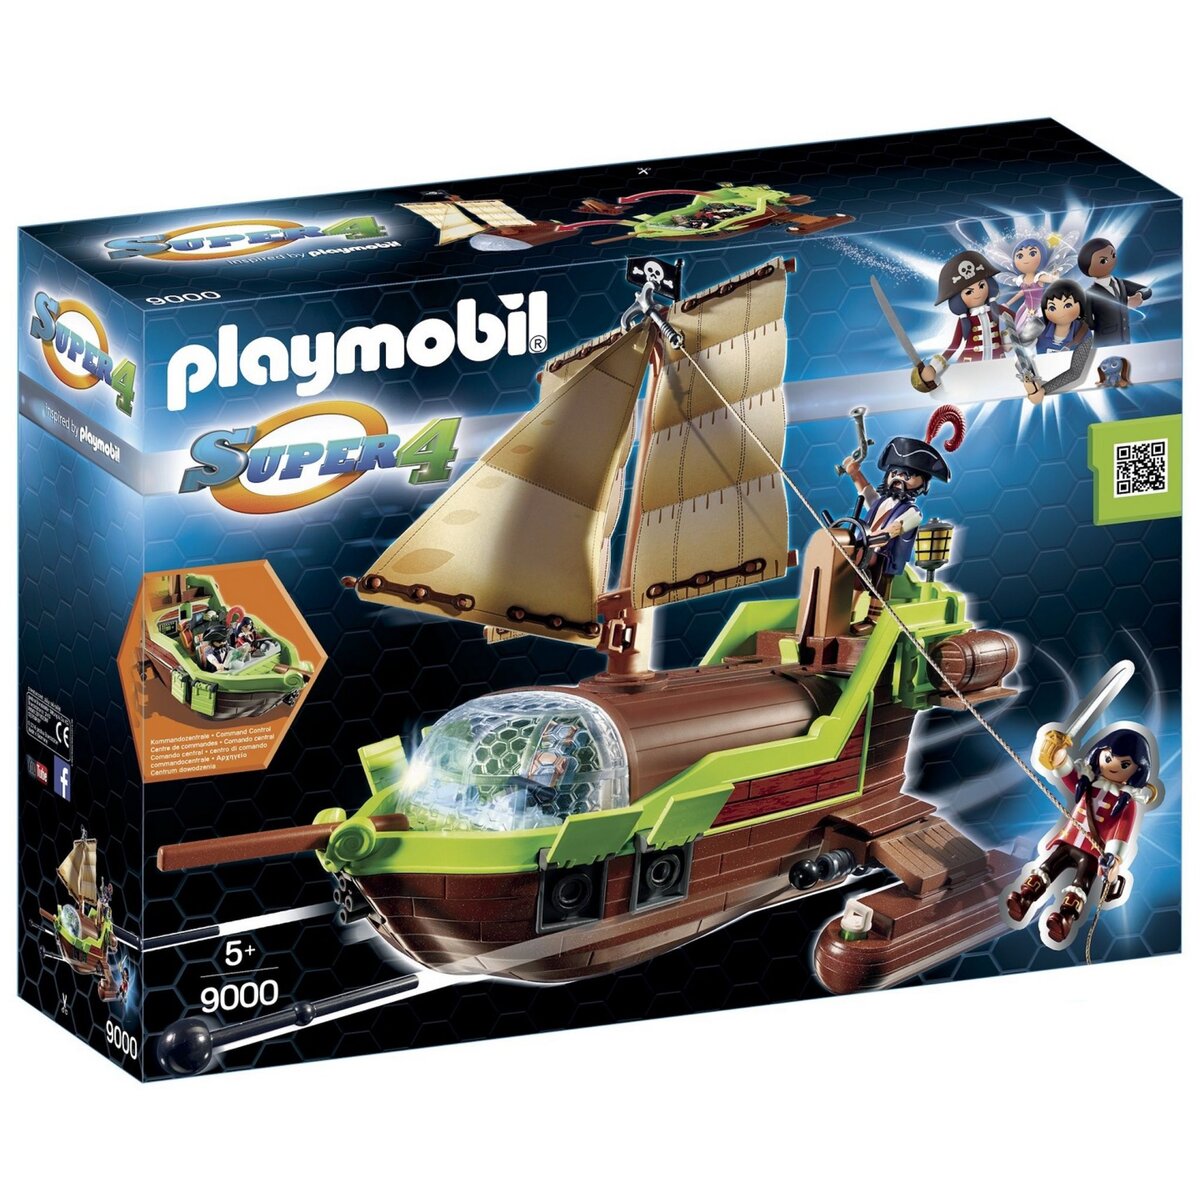 PLAYMOBIL 9000 - Super 4 - Bateau Pirate Caméléon avec Ruby